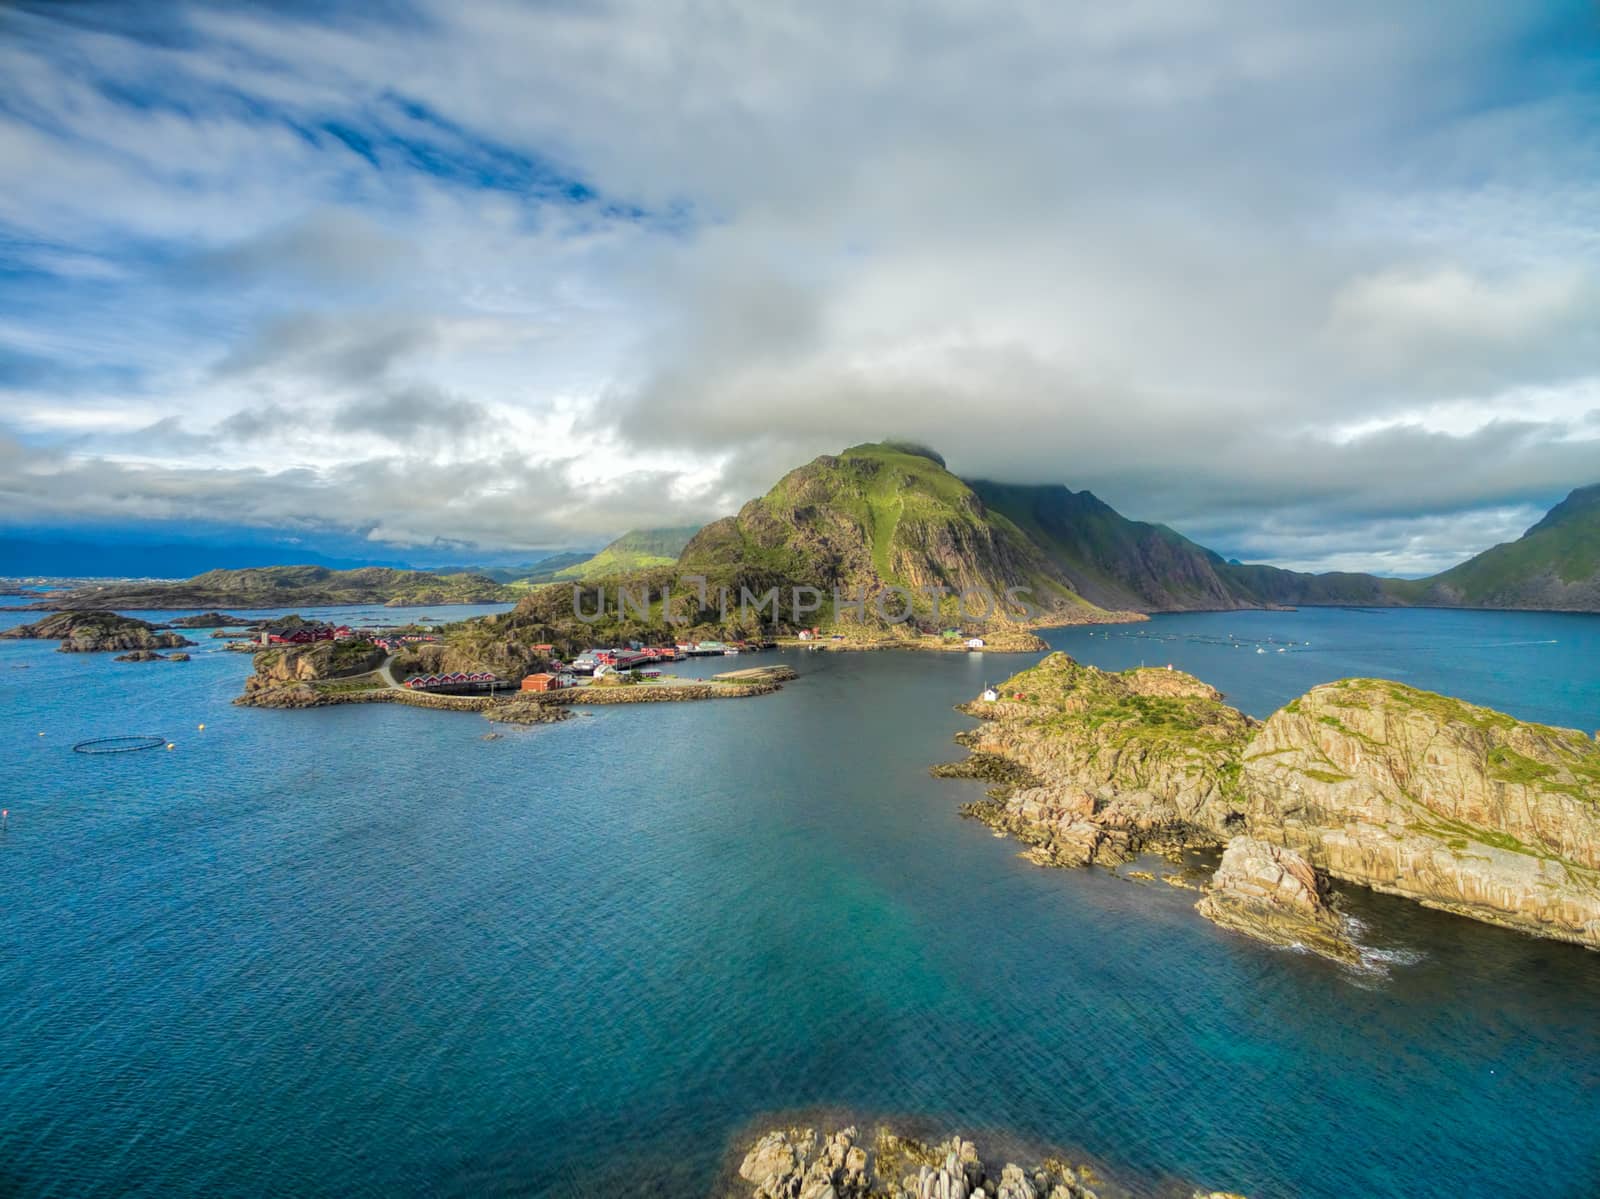 Norway coast by Harvepino